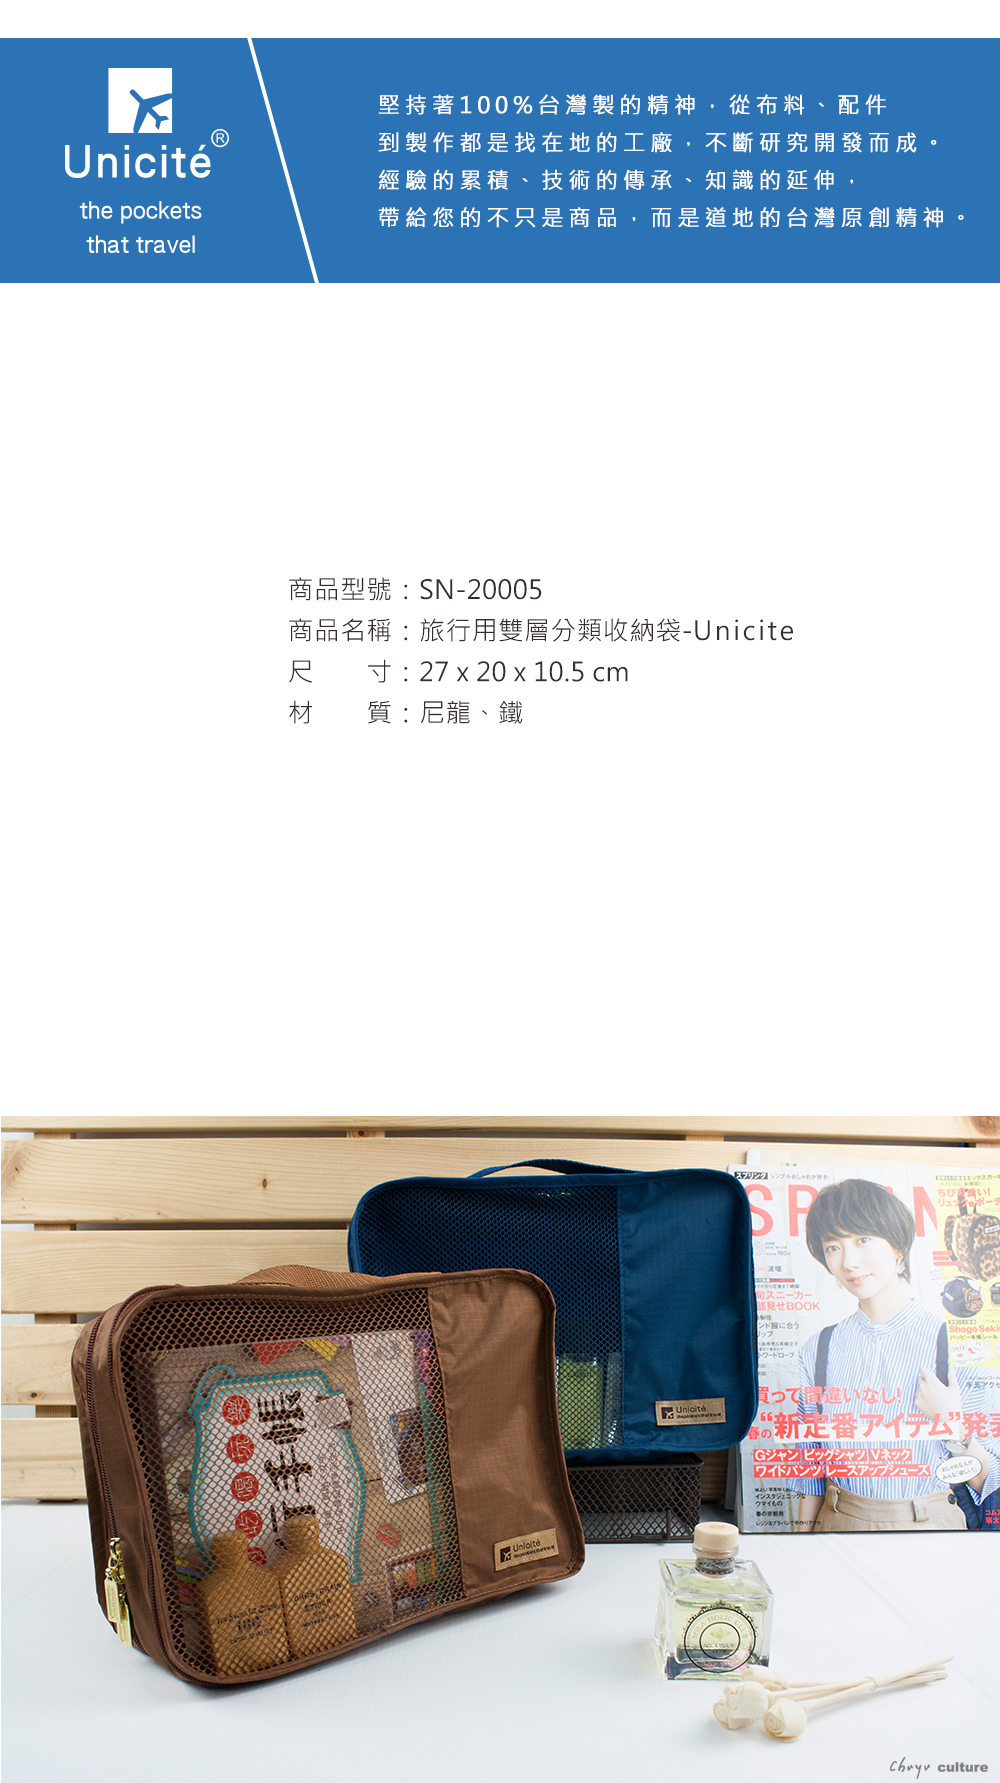 the pocketsthat travel堅持著100%台灣製的精神,從布料 配件到製作都是找在地的工廠,不斷研究開發而成。經驗的累積、技術的傳承、知識的延伸,帶給您的不只是商品,而是道地的台灣原創精神。商品型號:SN-20005商品名稱:行用雙層分類收納袋-尺寸:27 x 20 x 10.5 cm材質:尼龍、鐵UniciteBOOKンドに合う買って間違いなしUnicité!Shogo アクセ新定番アイテム発売ワイドパンツレースアップシューウマイもの春の旅 culture